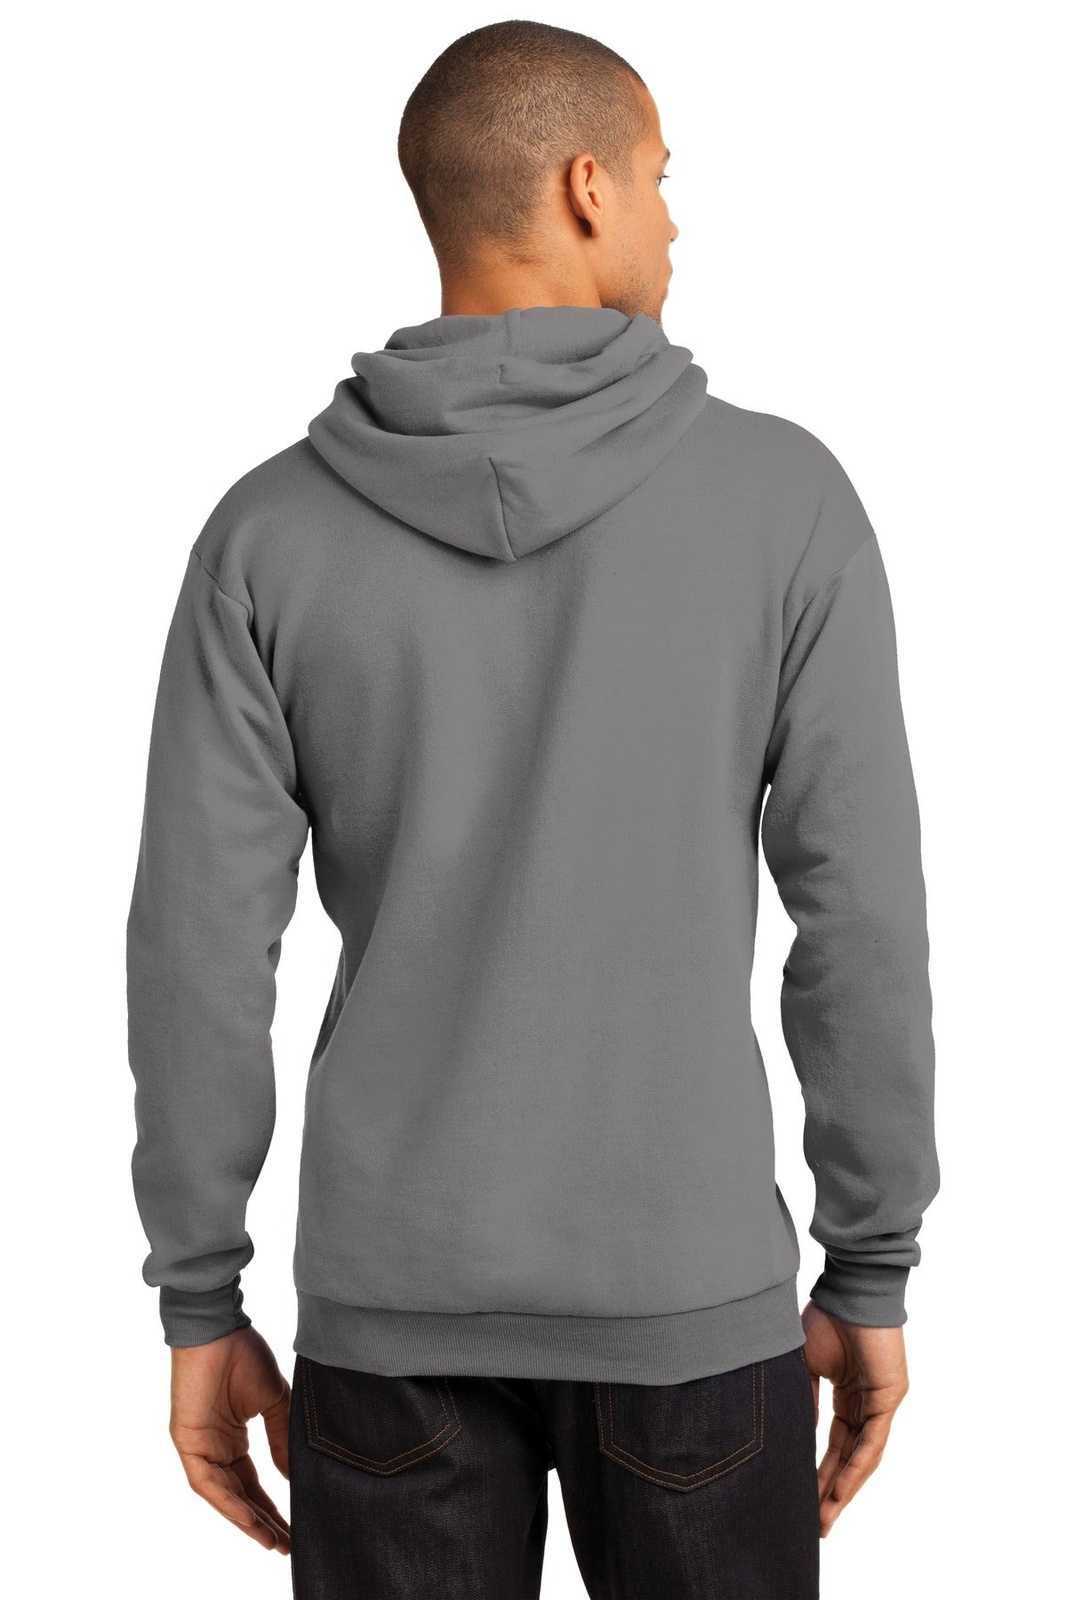 Port & Company PC78H Core Fleece Pullover Hooded Sweatshirt - Medium Gray - HIT a Double - 1